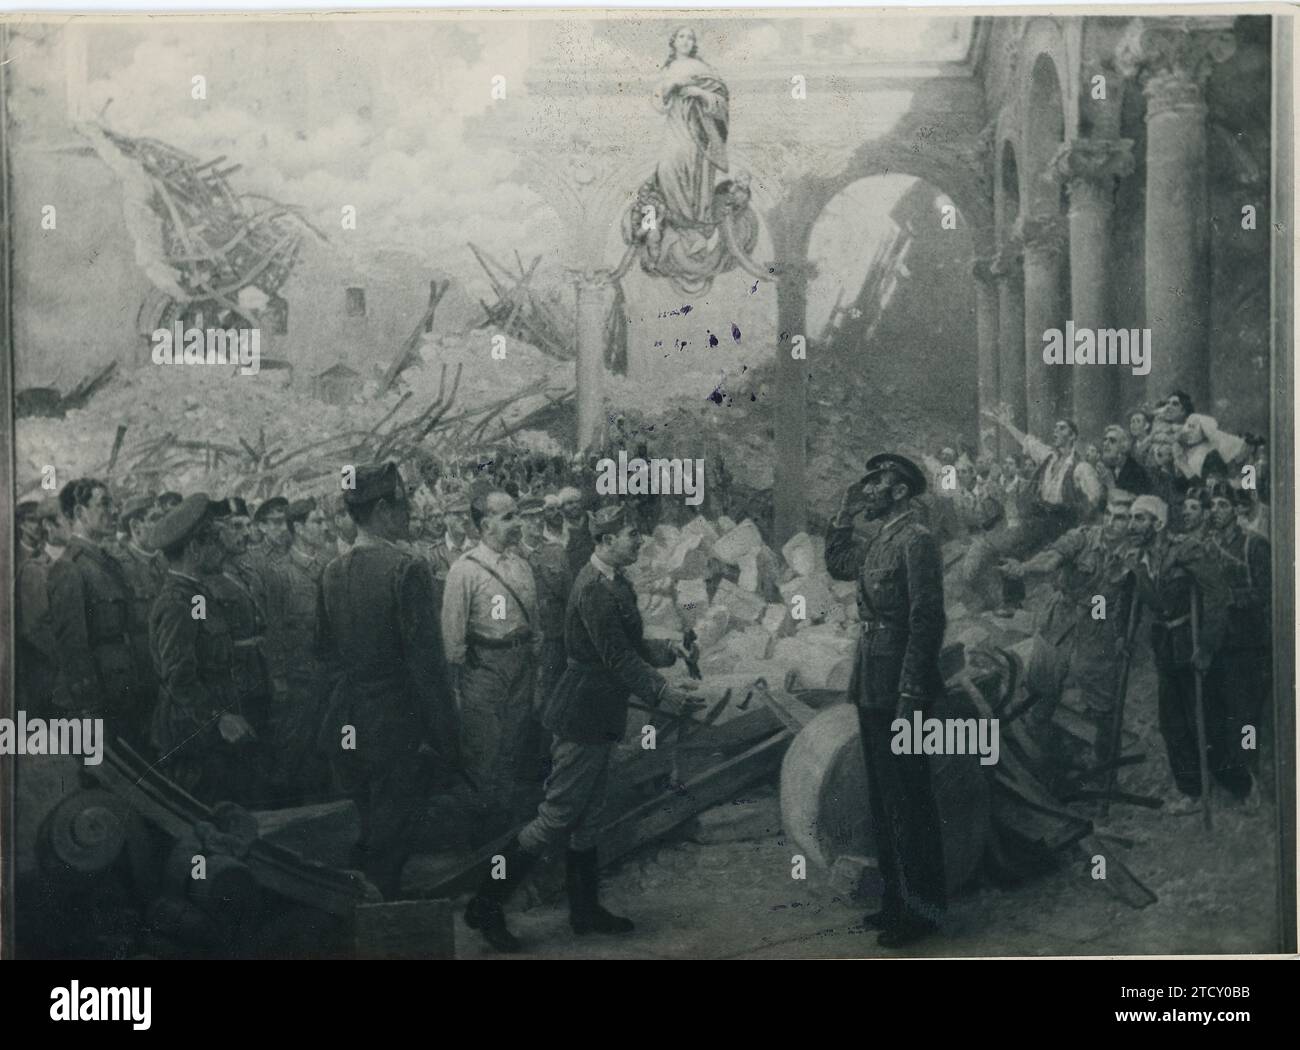 Toledo, 1940 (CA.). Civil War, 'No news in the alcazar', painting by Cesar Alvarez Dumont that captures that historic moment. Credit: Album / Archivo ABC / Virgilio Muro Stock Photo